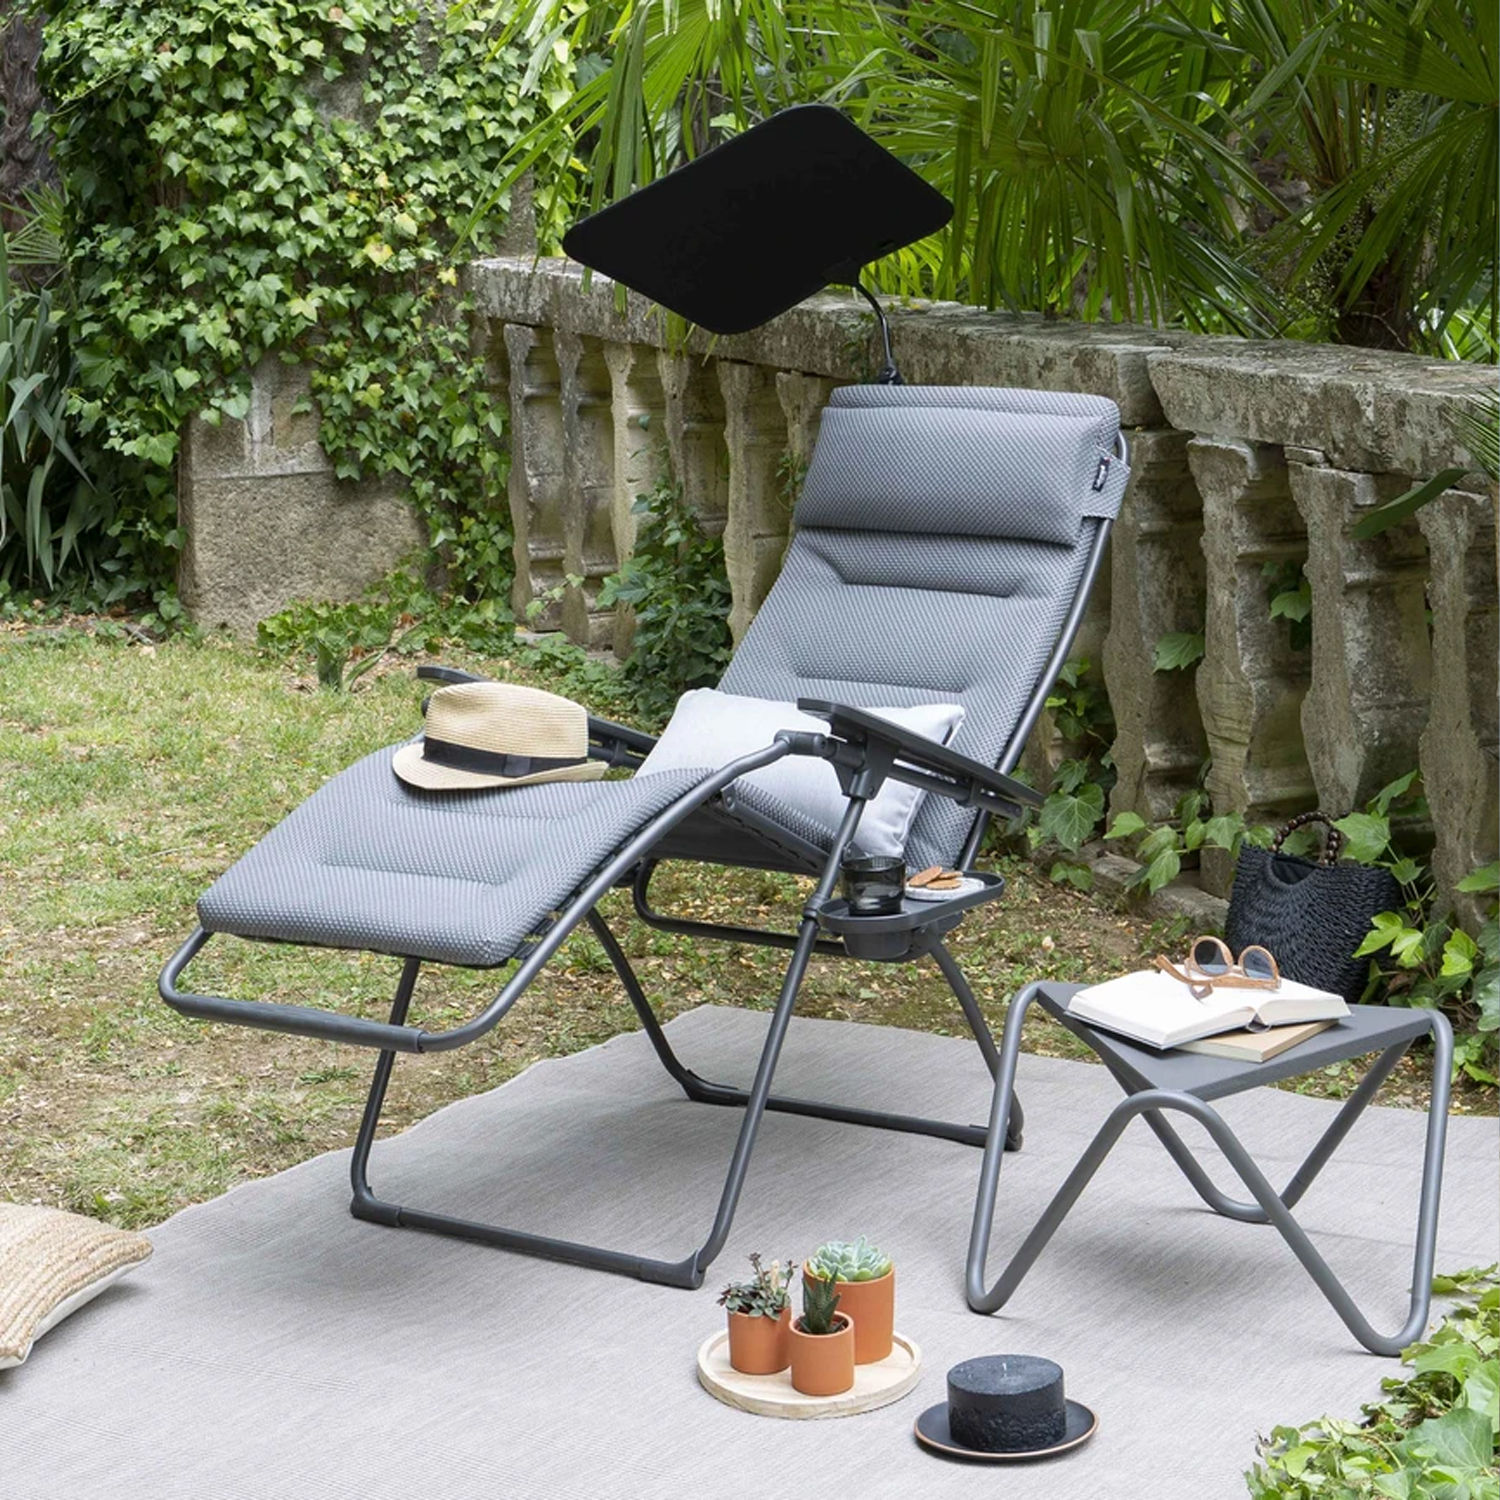 Lafuma Outdoor Zero Gravity Camping Chair Sun Shade Attachment Accessory, Noir - image 4 of 5